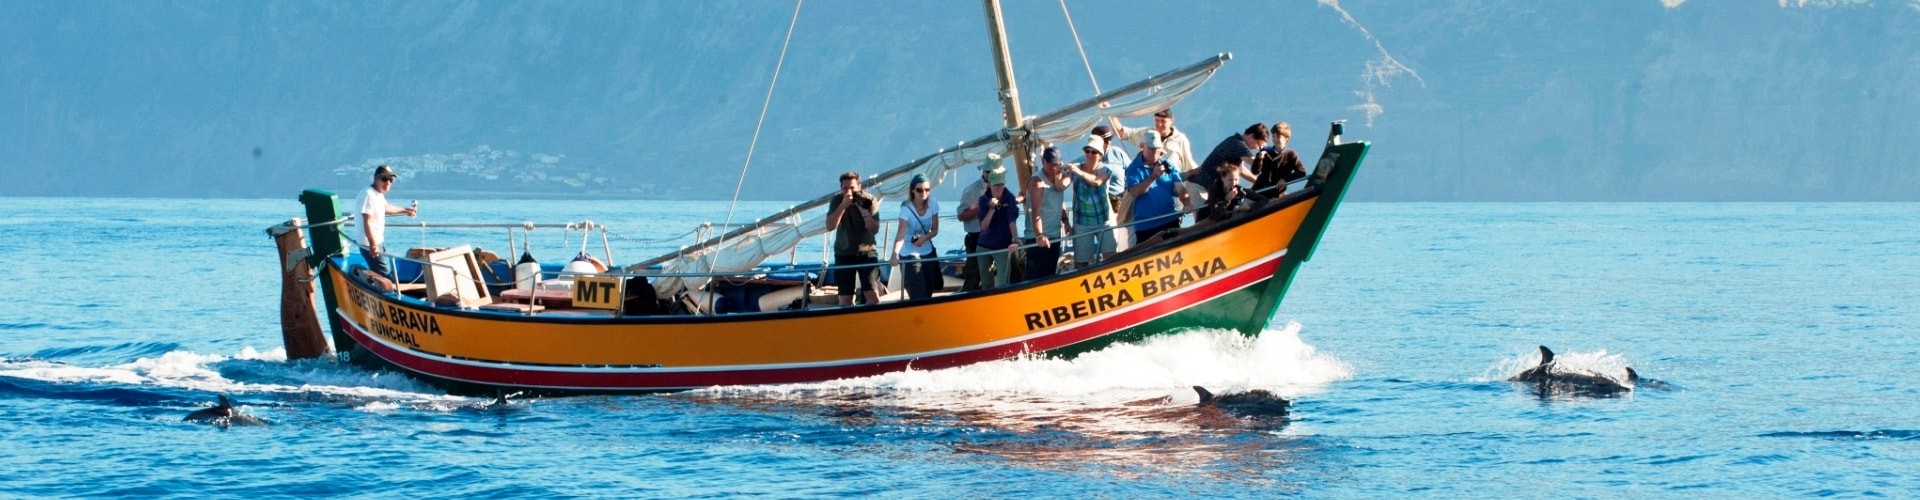 Ribeira Brava whale watching tour from Calheta, Madeira